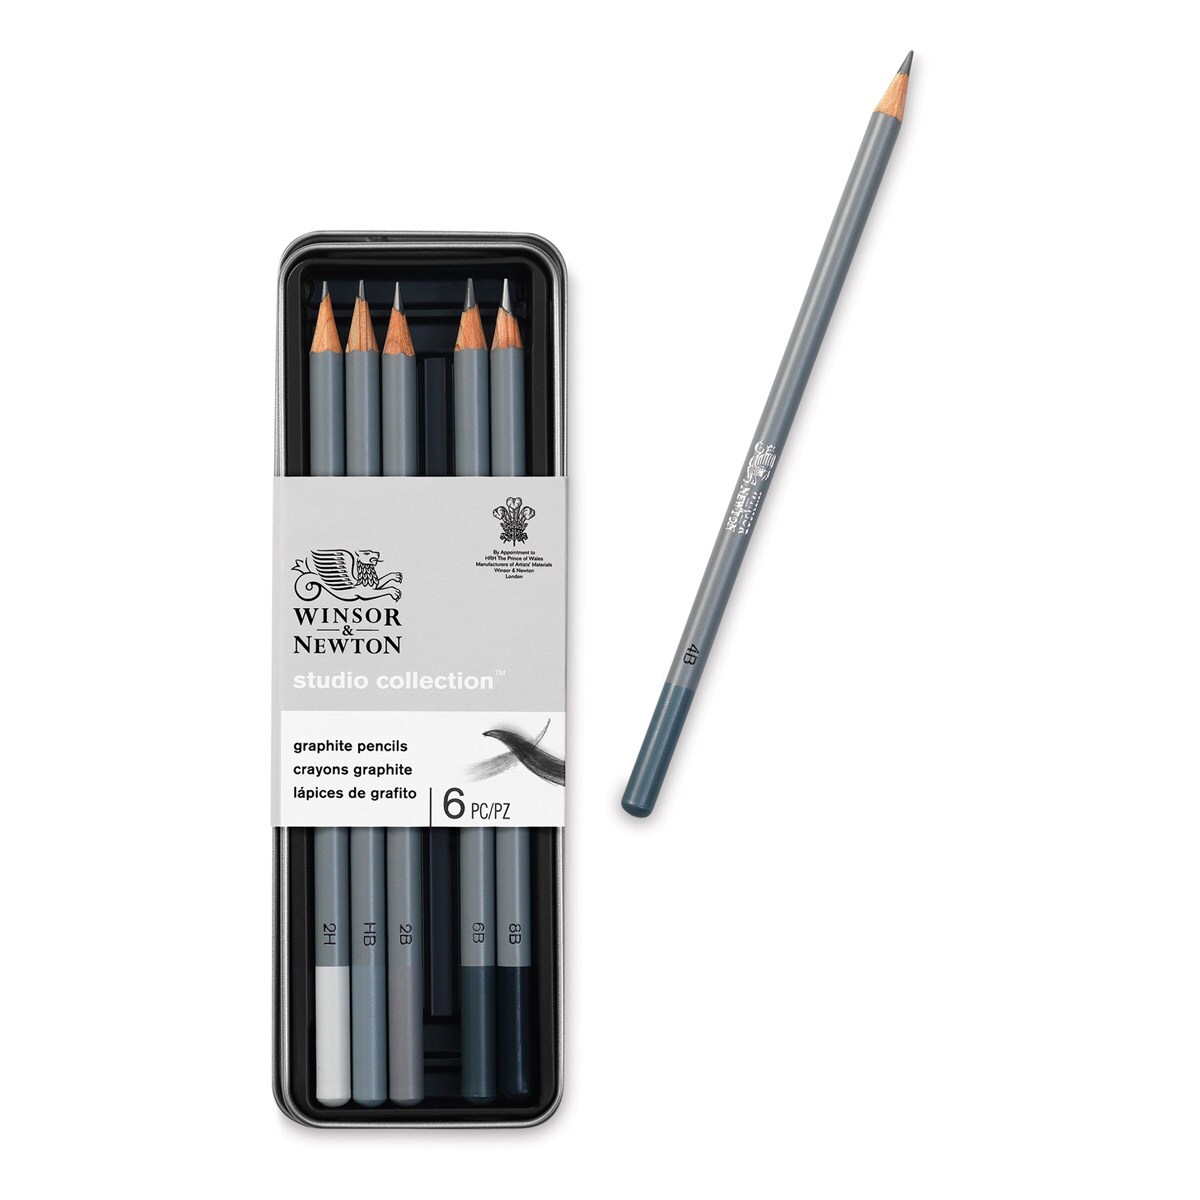 Winsor & Newton Studio Collection Artist Pencils, Color Pencils, Set of 48